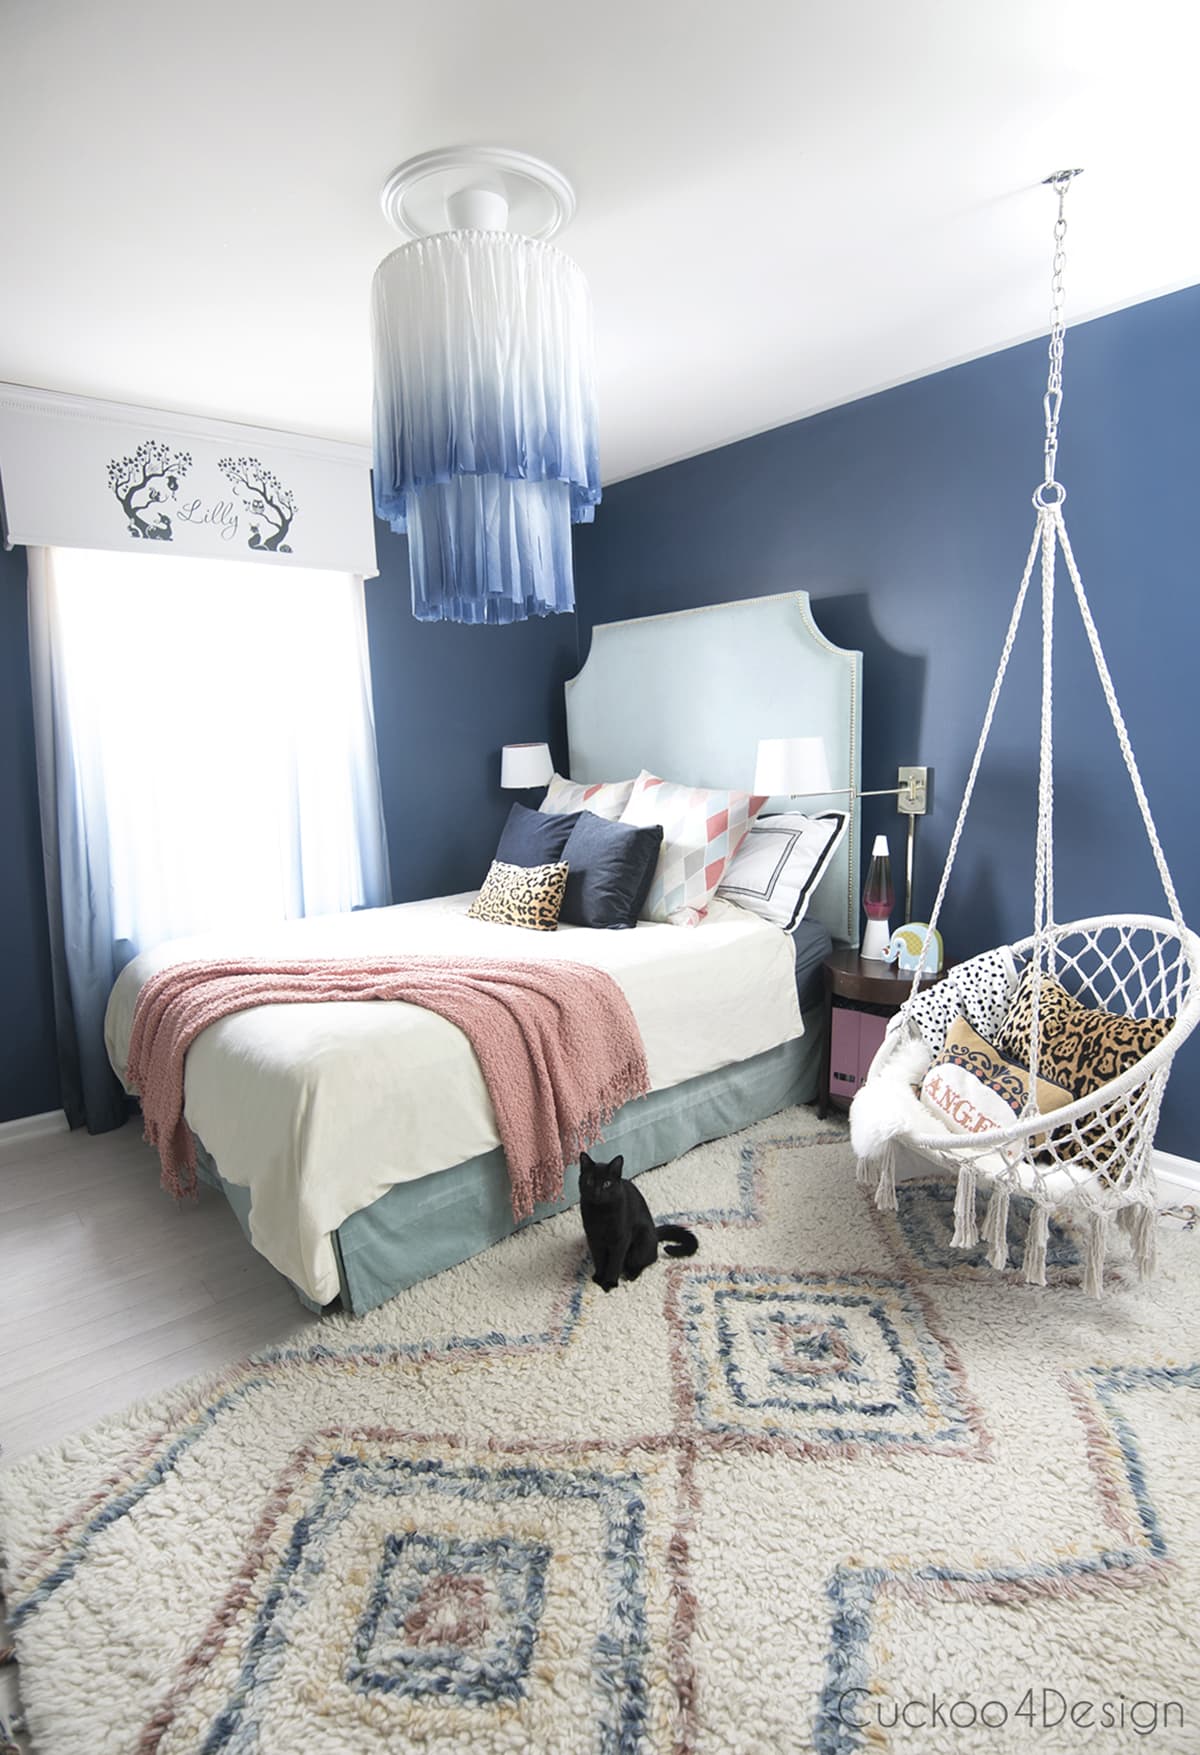 the DIY upholstered headboard in dark blue teen girl bedroom